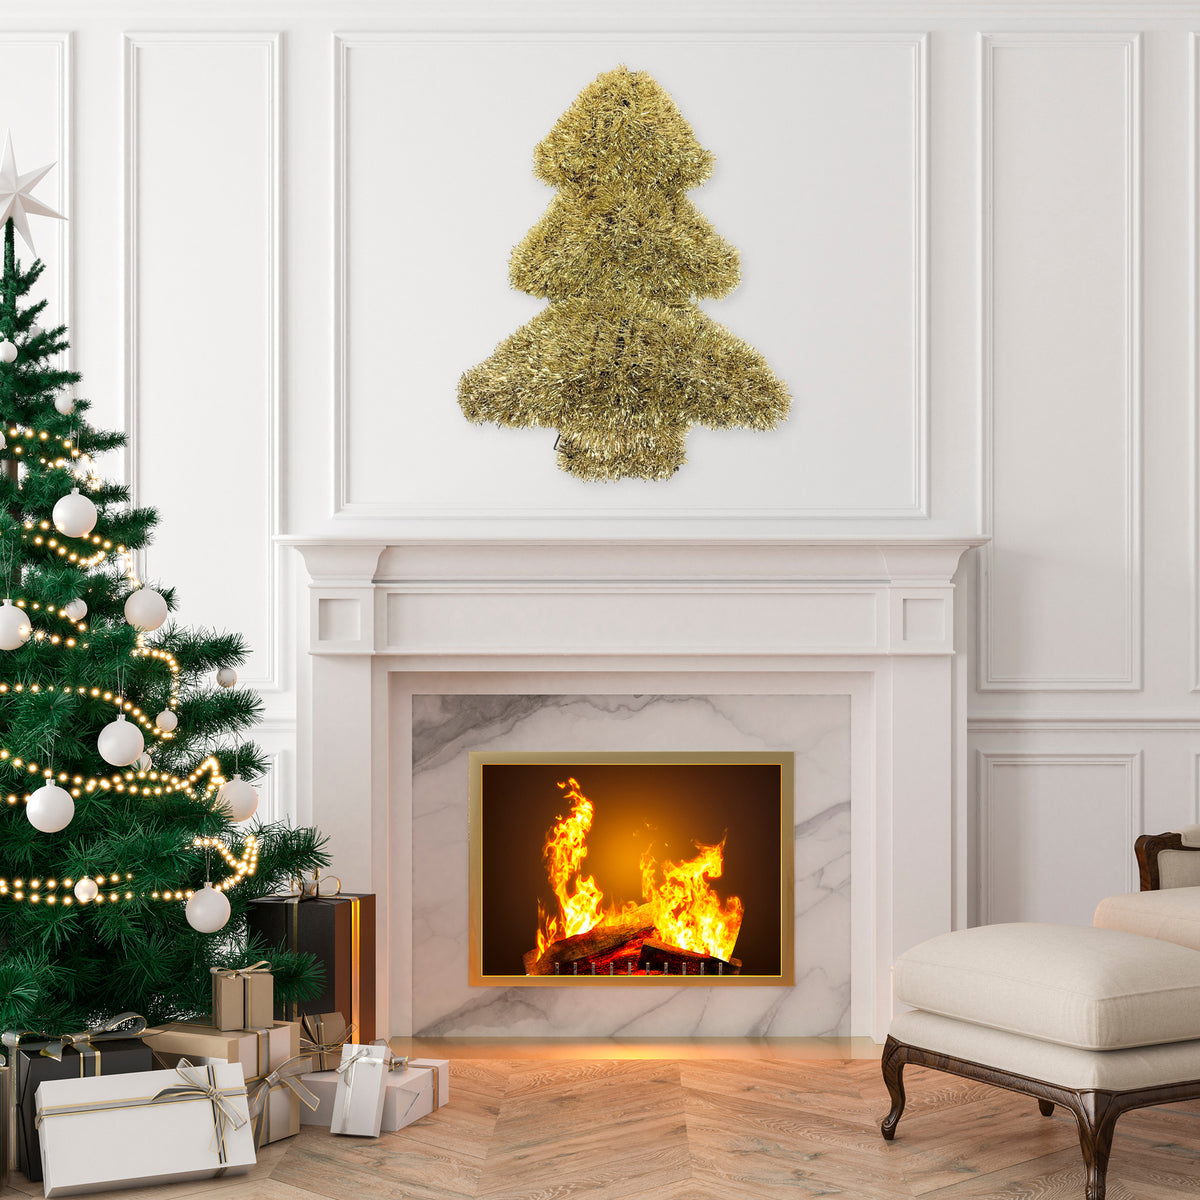 Gold Jumbo Foil Covered Christmas Tree